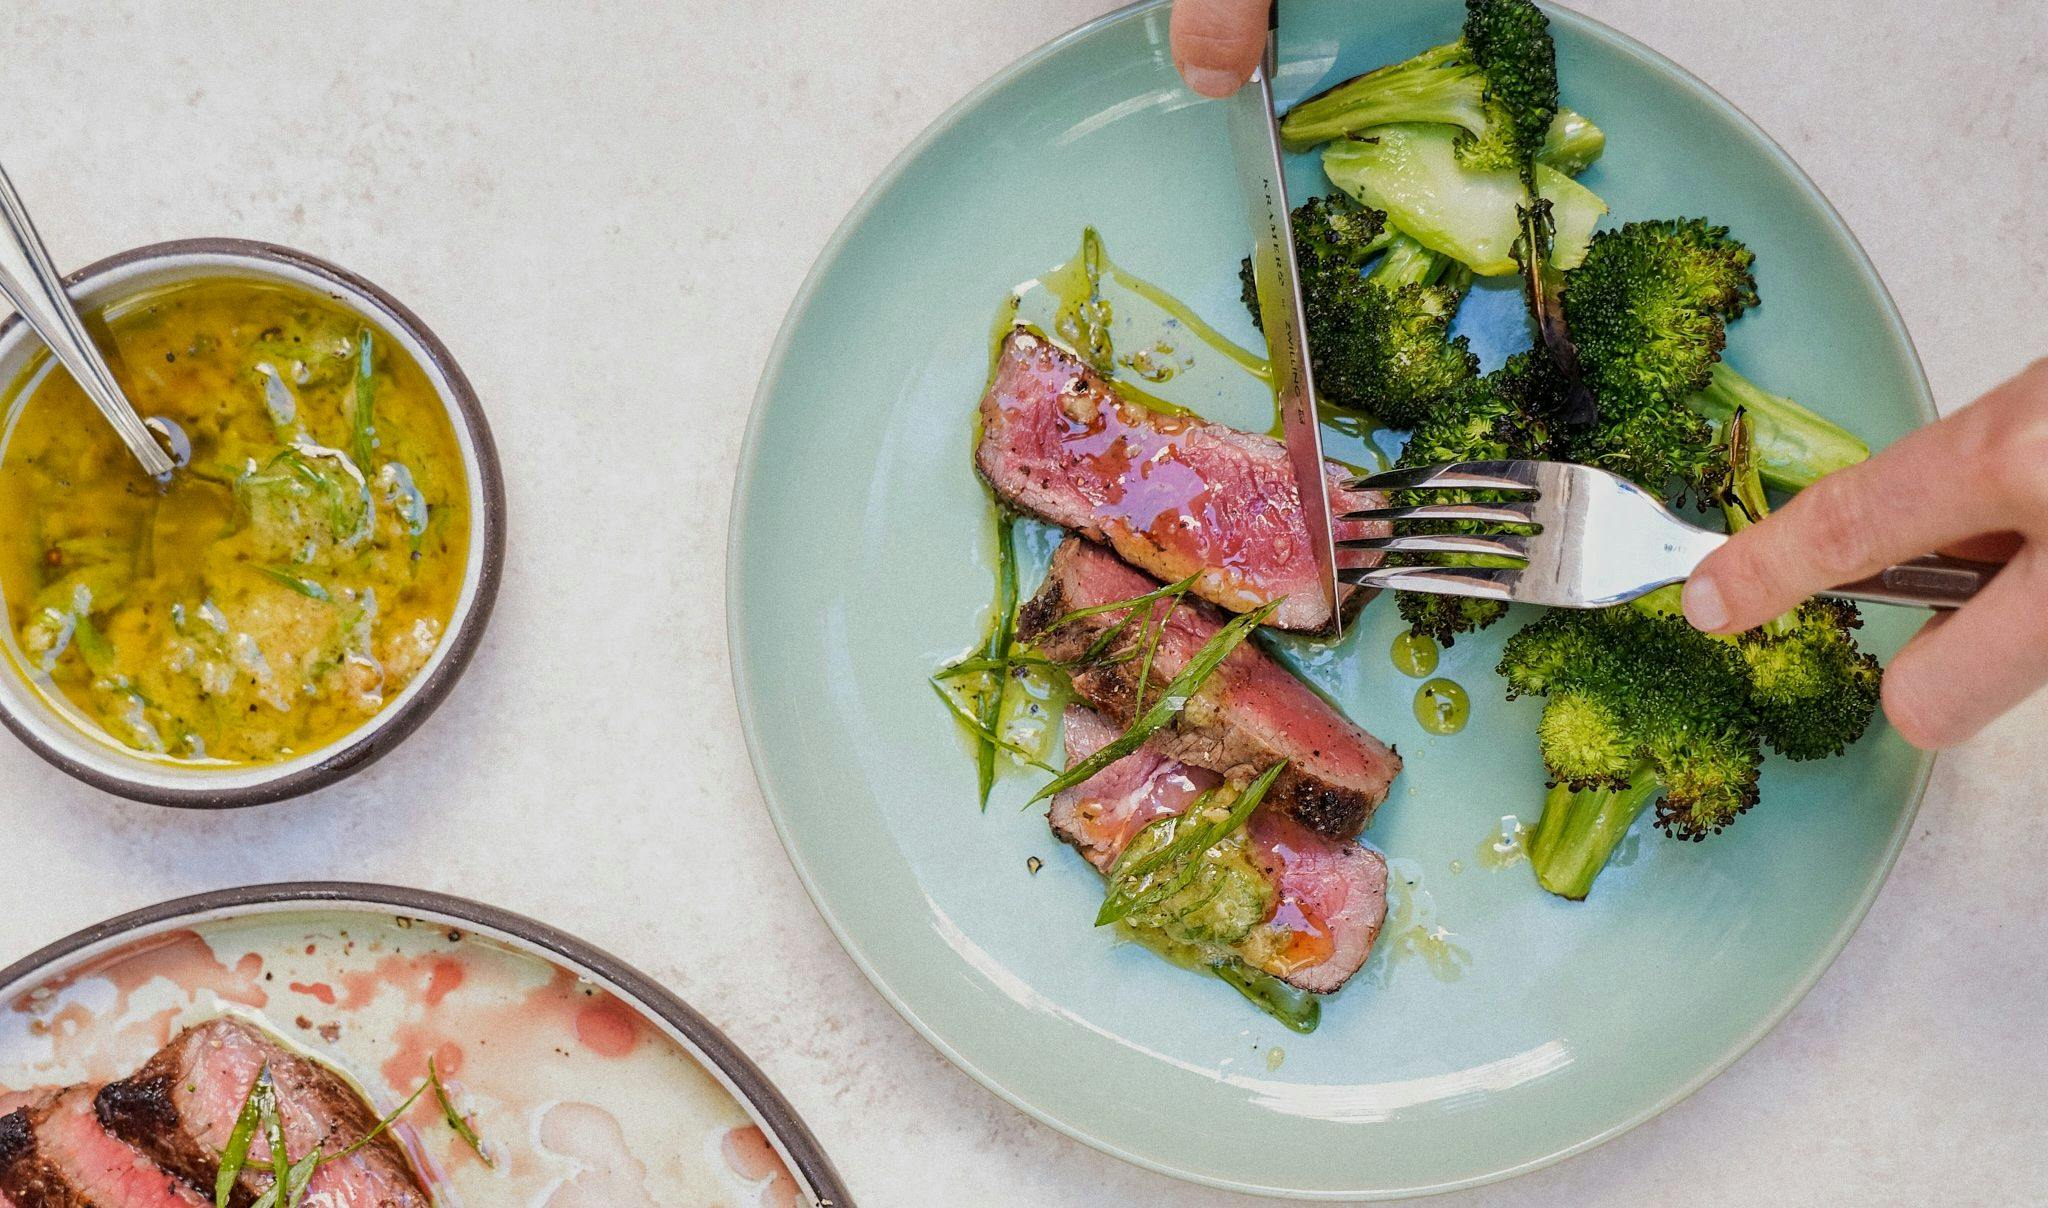 Slicing Steak with Broccoli